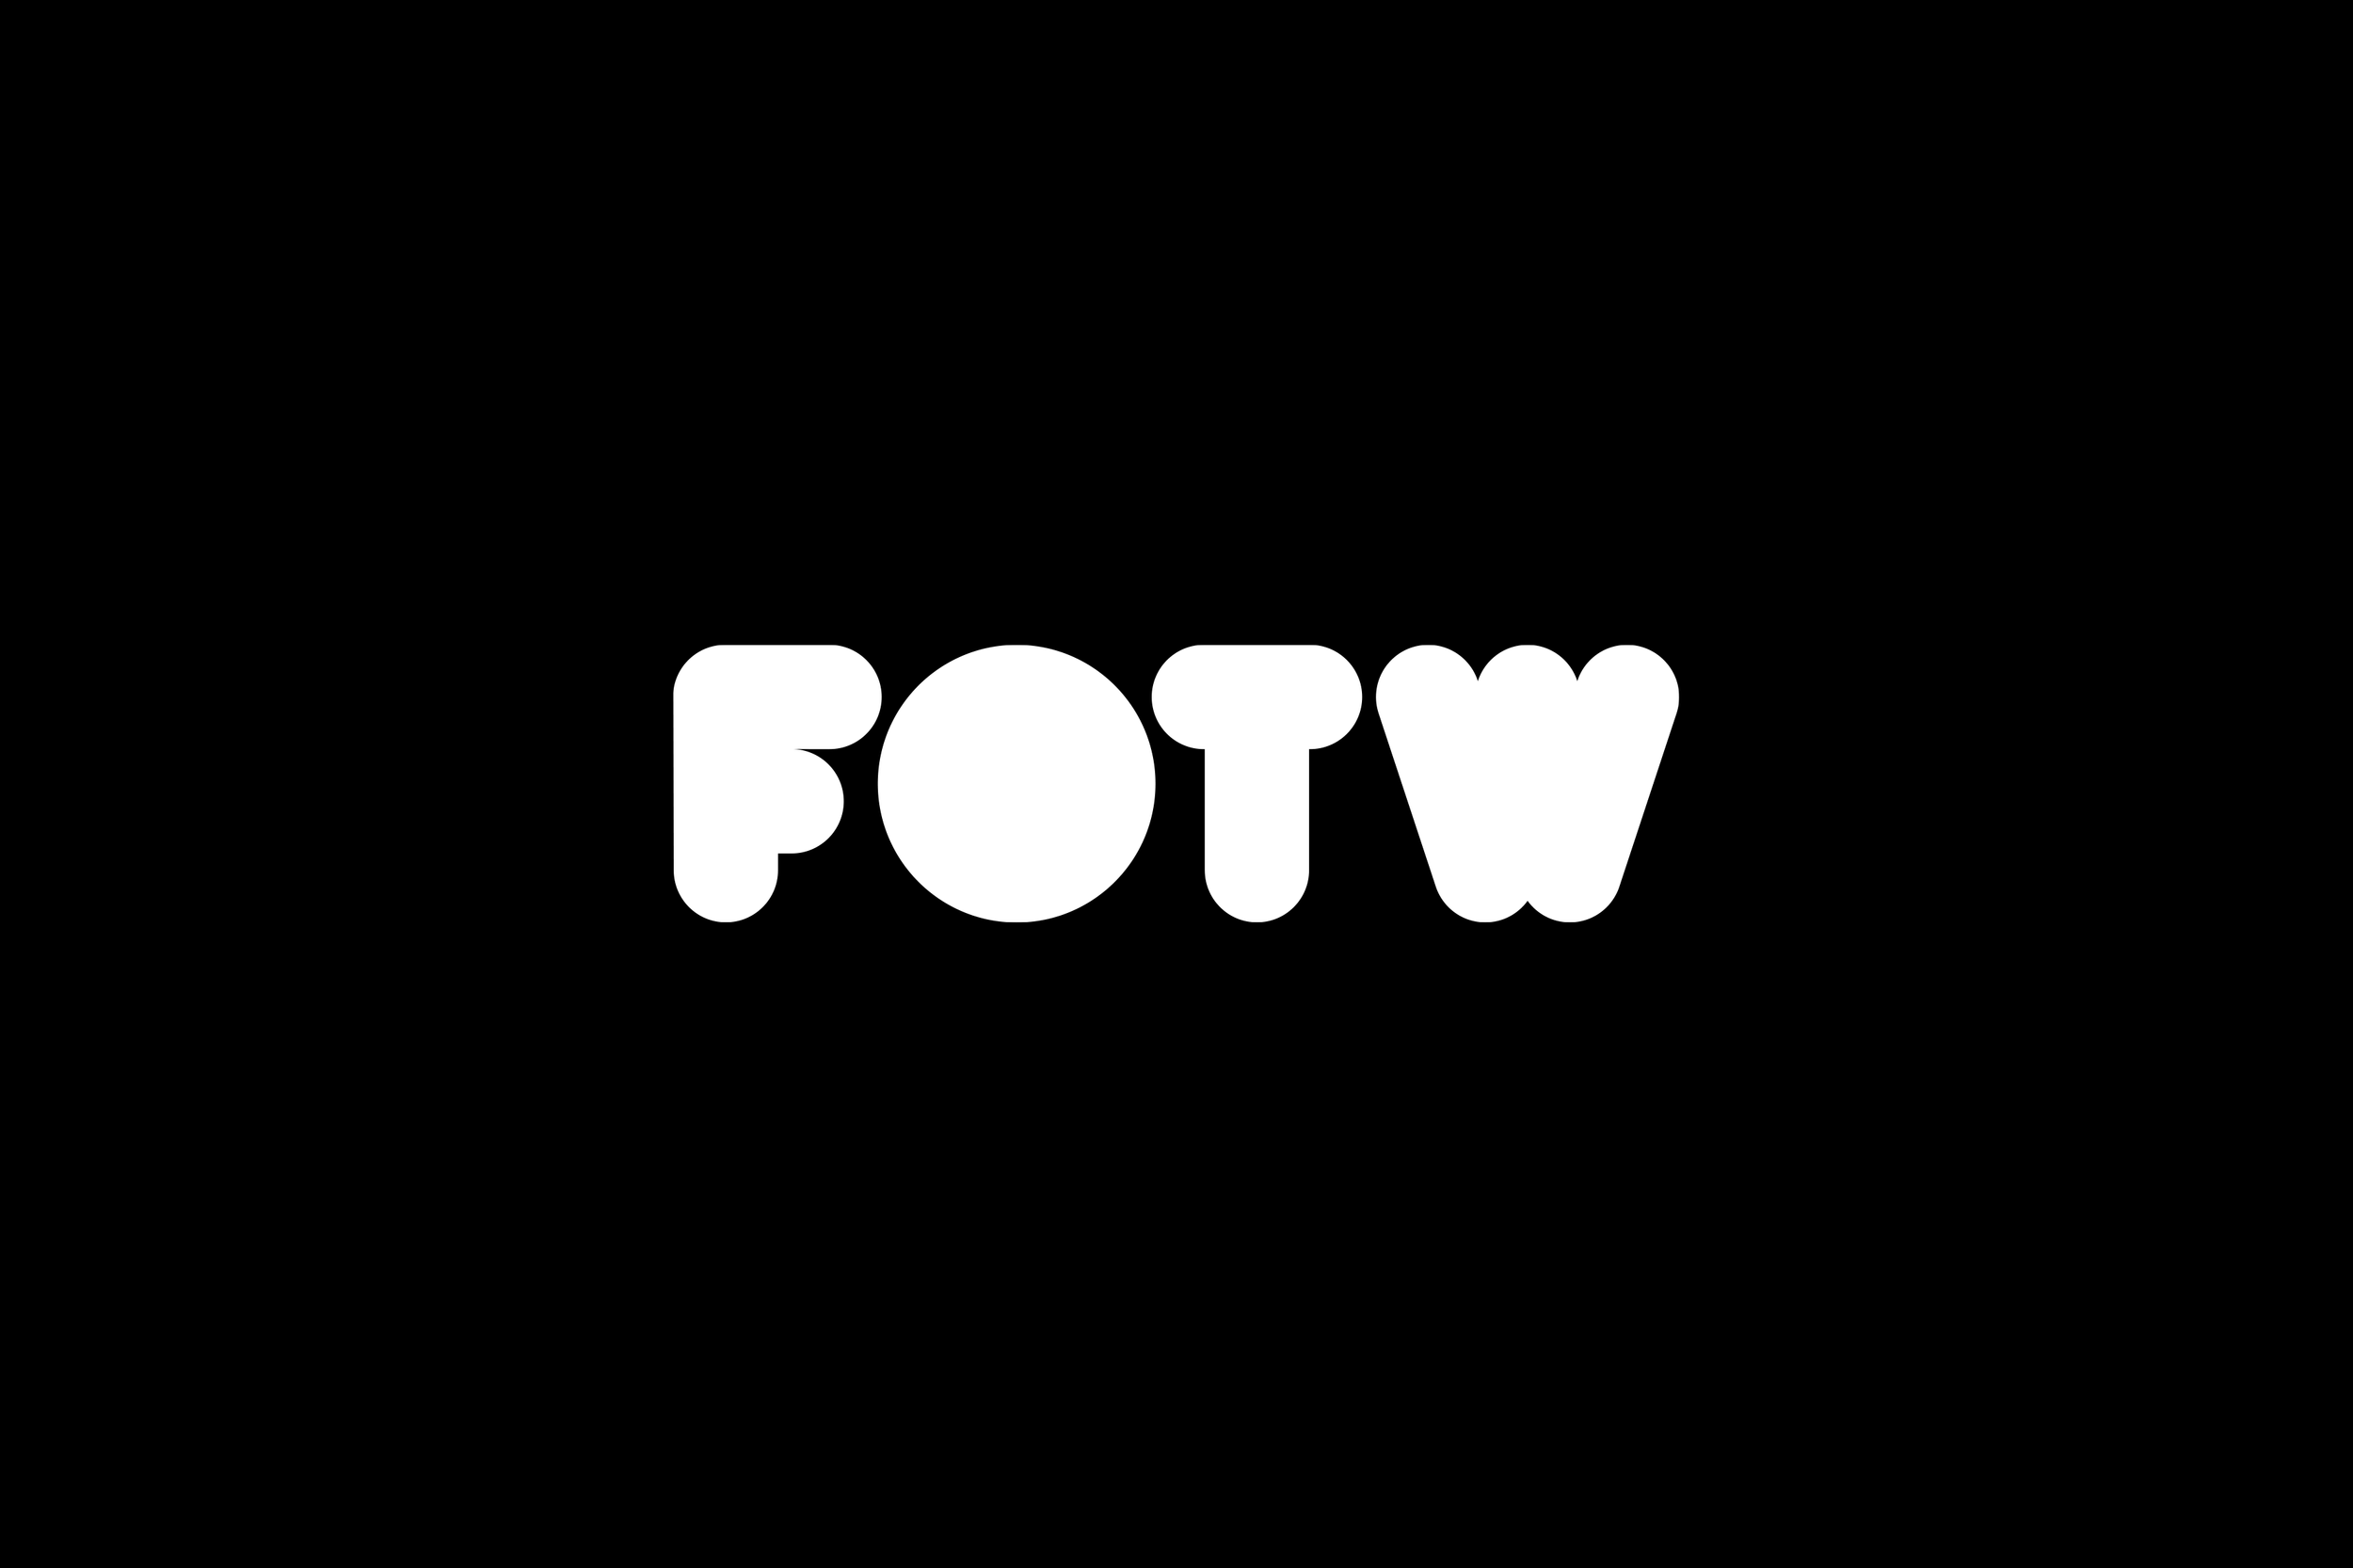 fotw-logo.png